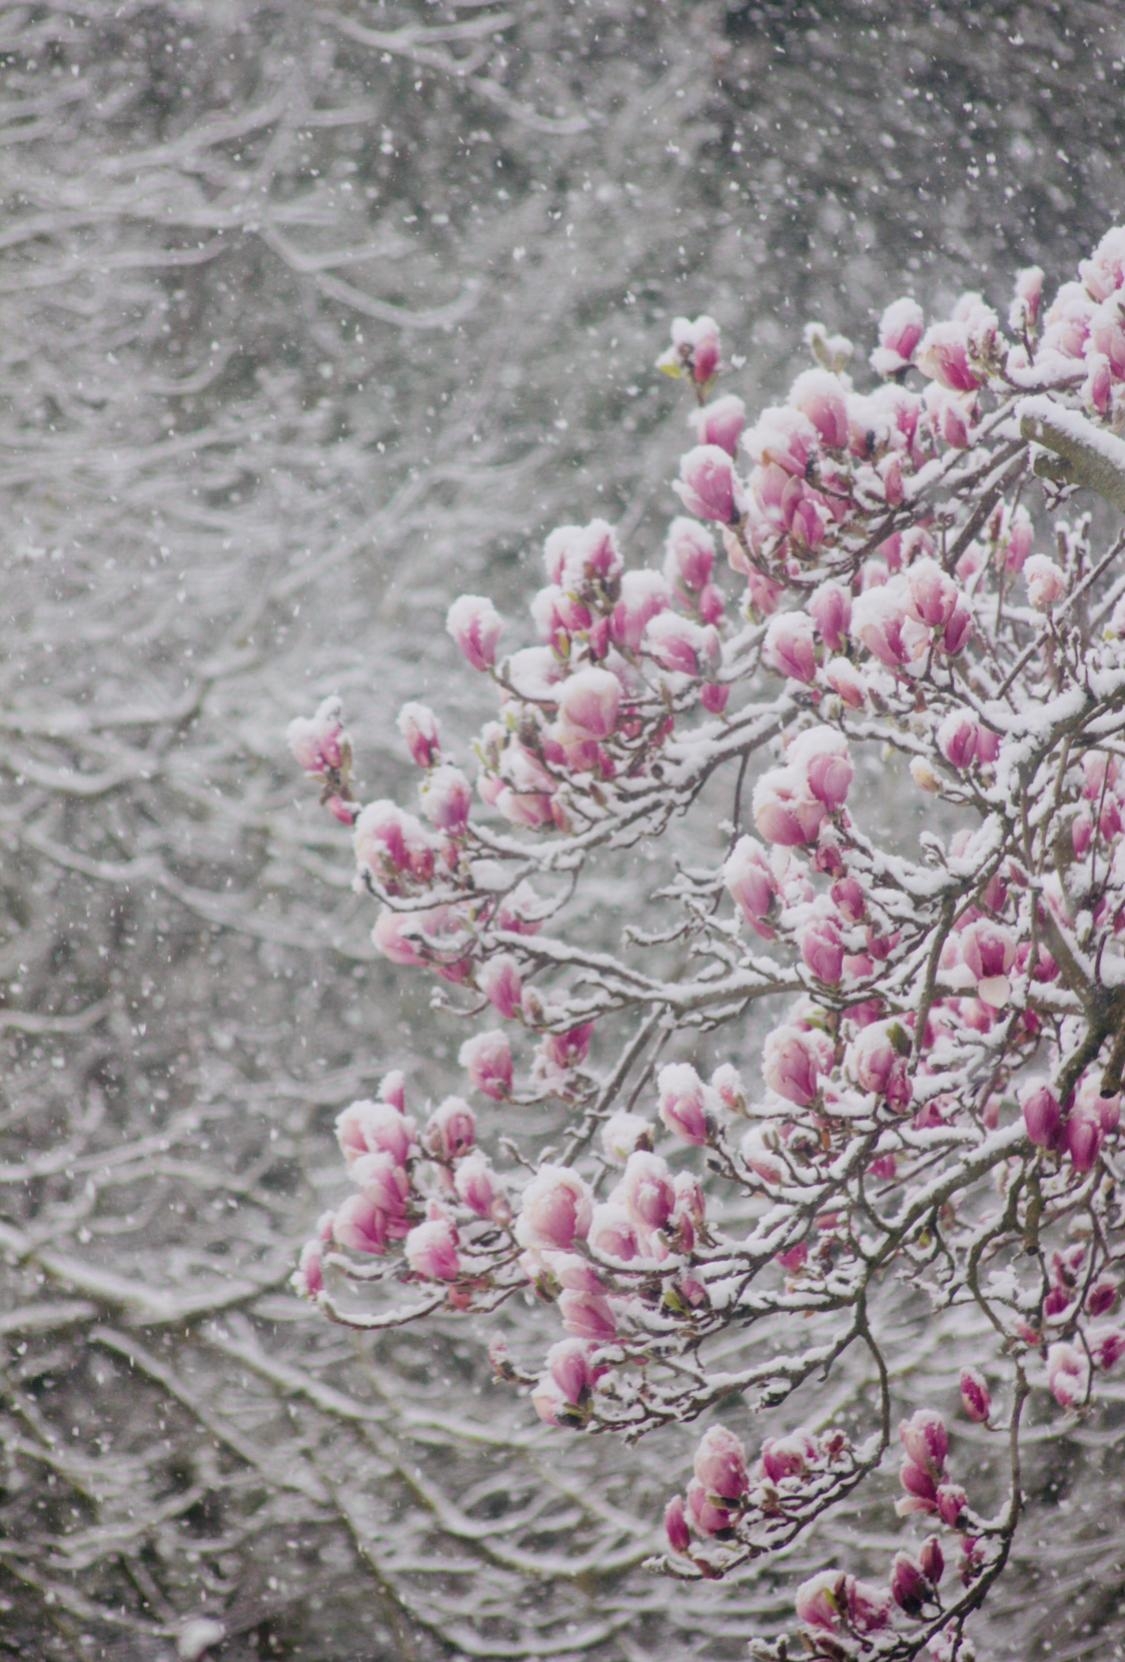 nä, april april, was soll das denn 🧐🌝😸
#couchliebt#schnee#april#frühling#blümen#magnolia